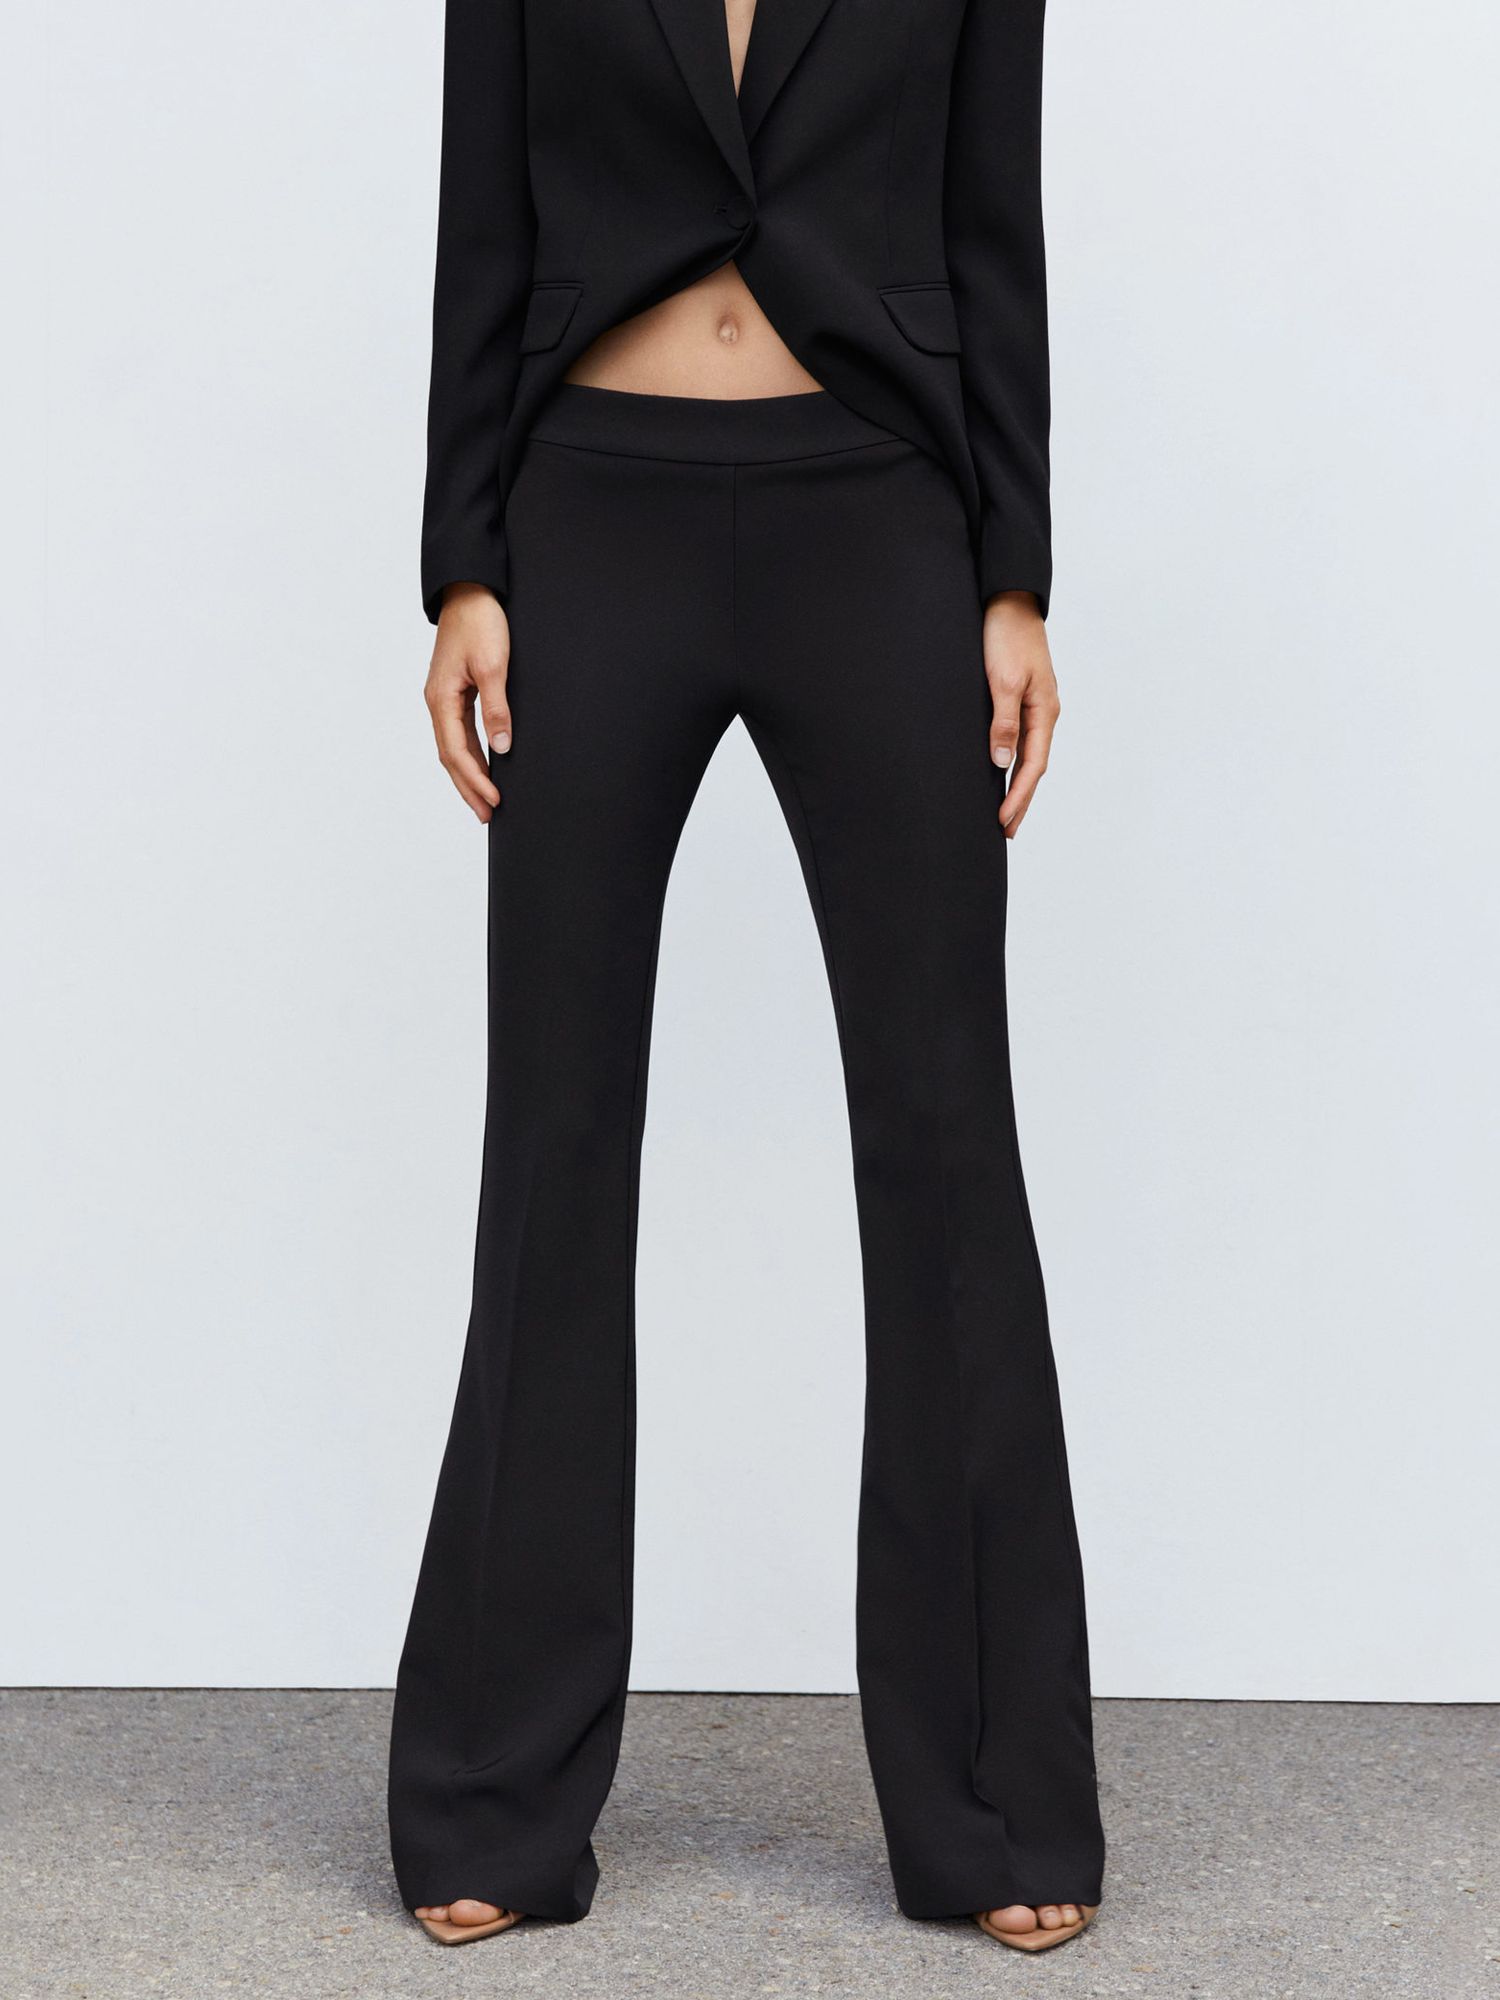 Mango Teresa Tailored Flared Trousers, Black at John Lewis & Partners